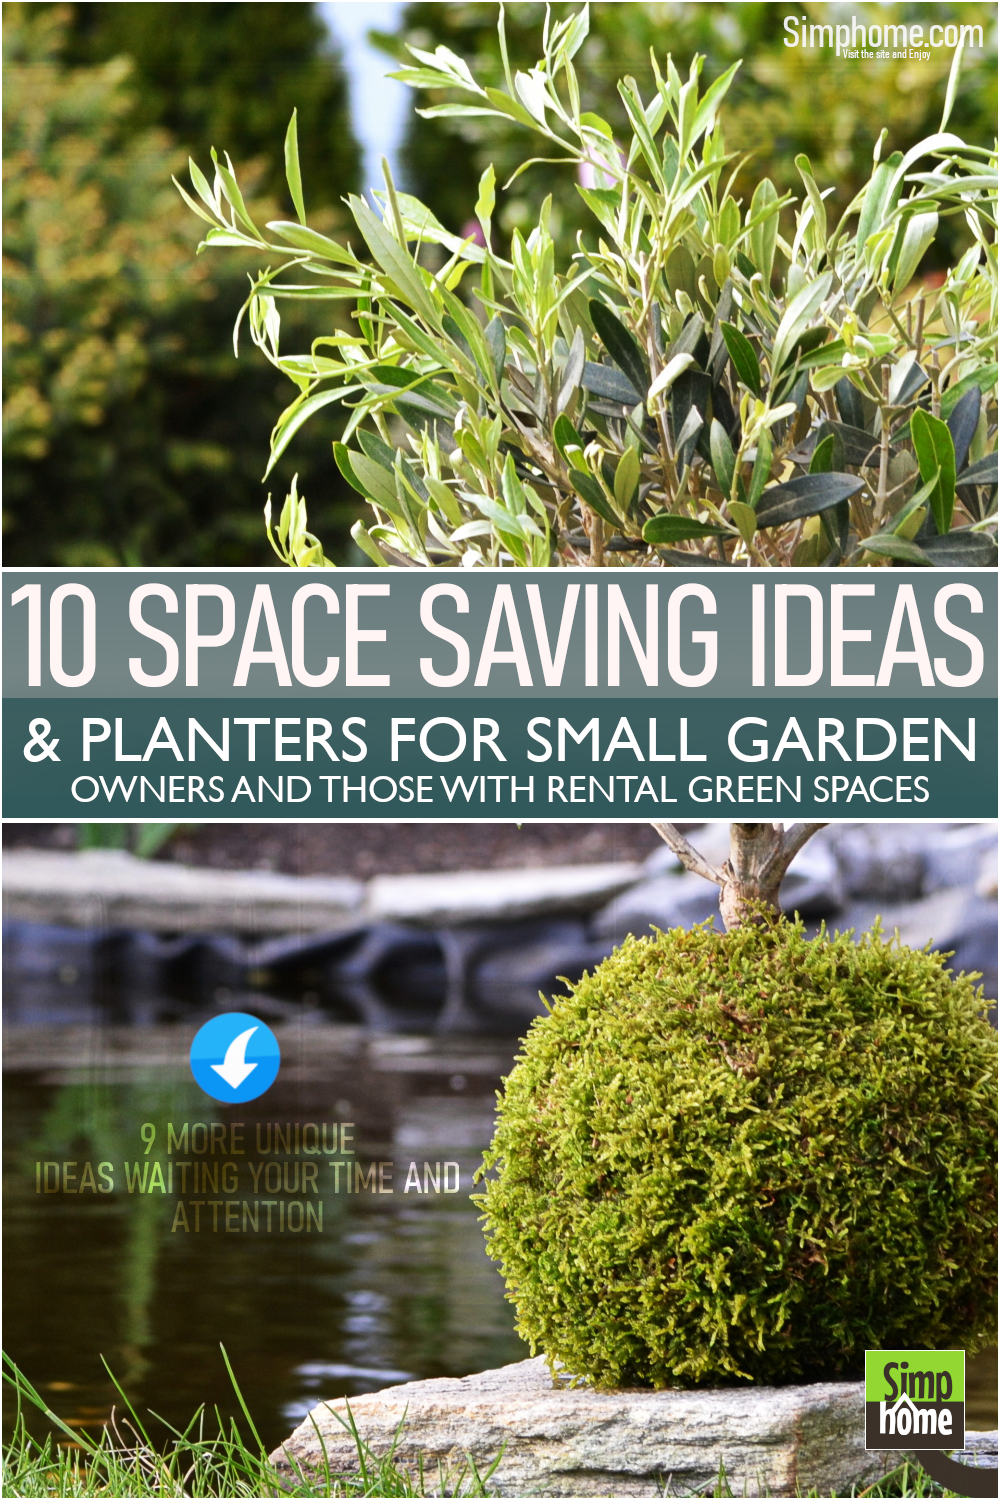 Get the 10 Space saving ideas for a small garden